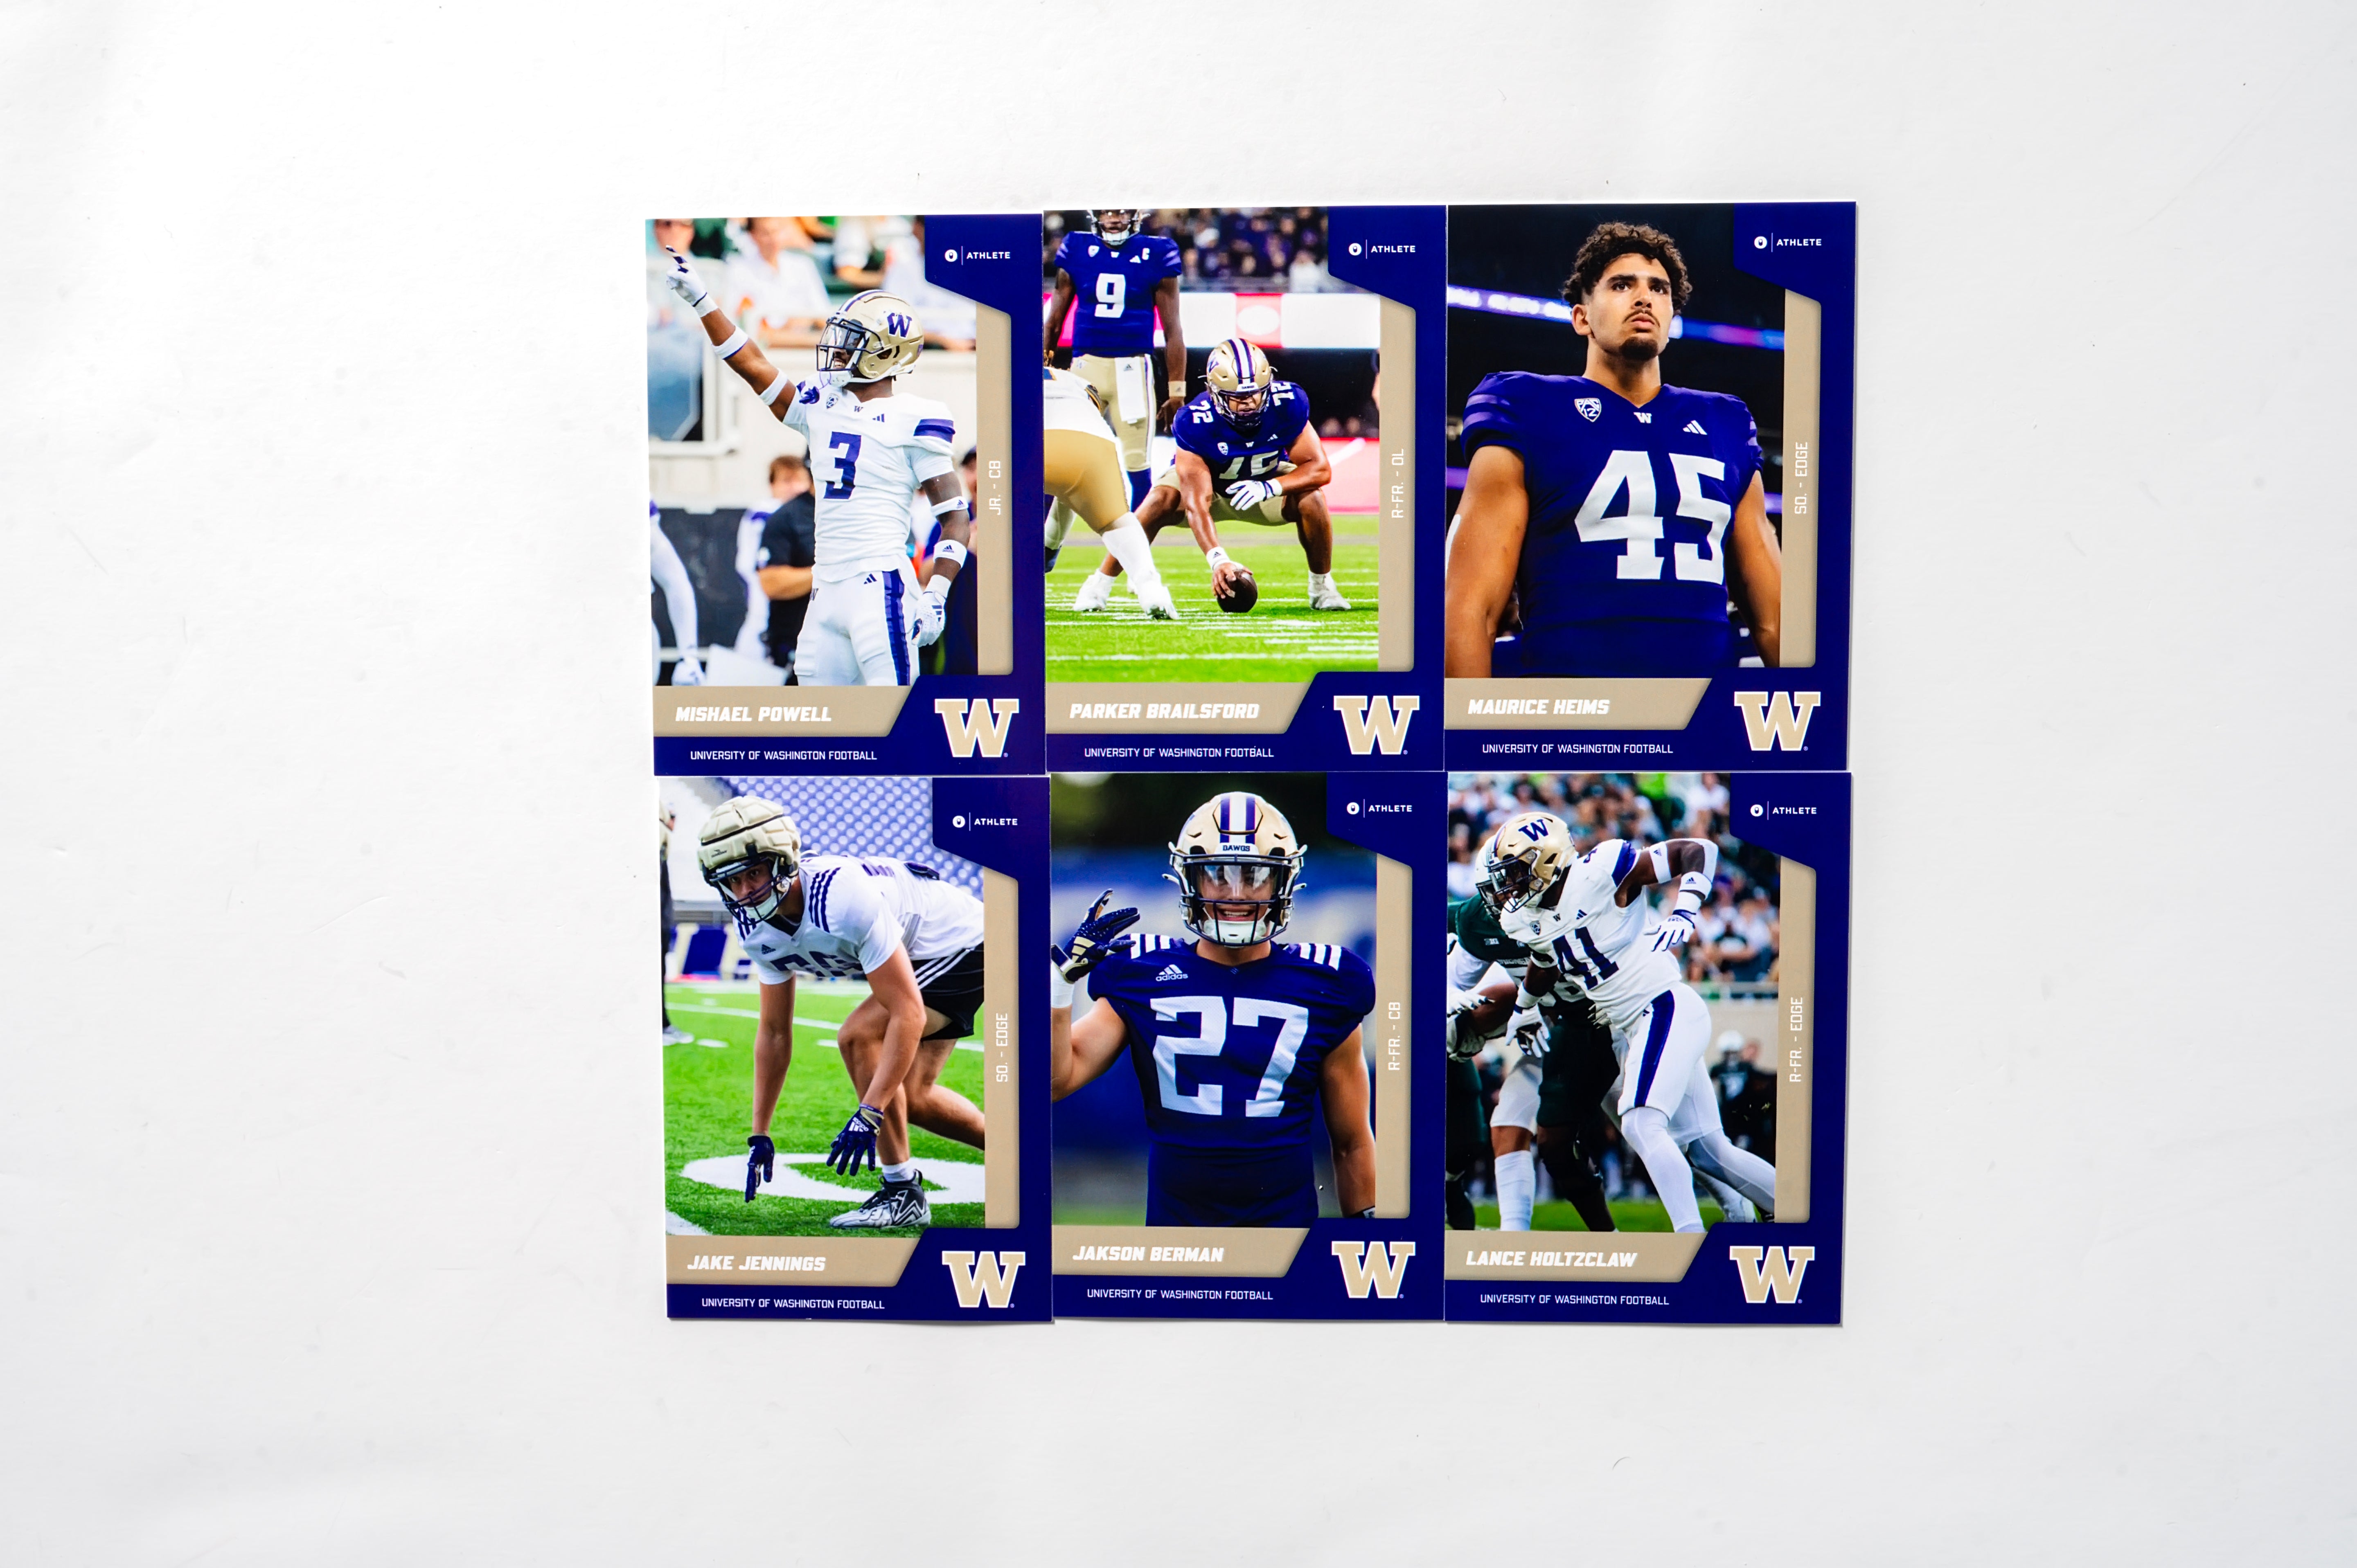 University of Washington® NIL Football - 2023 Trading Cards - Single Pack